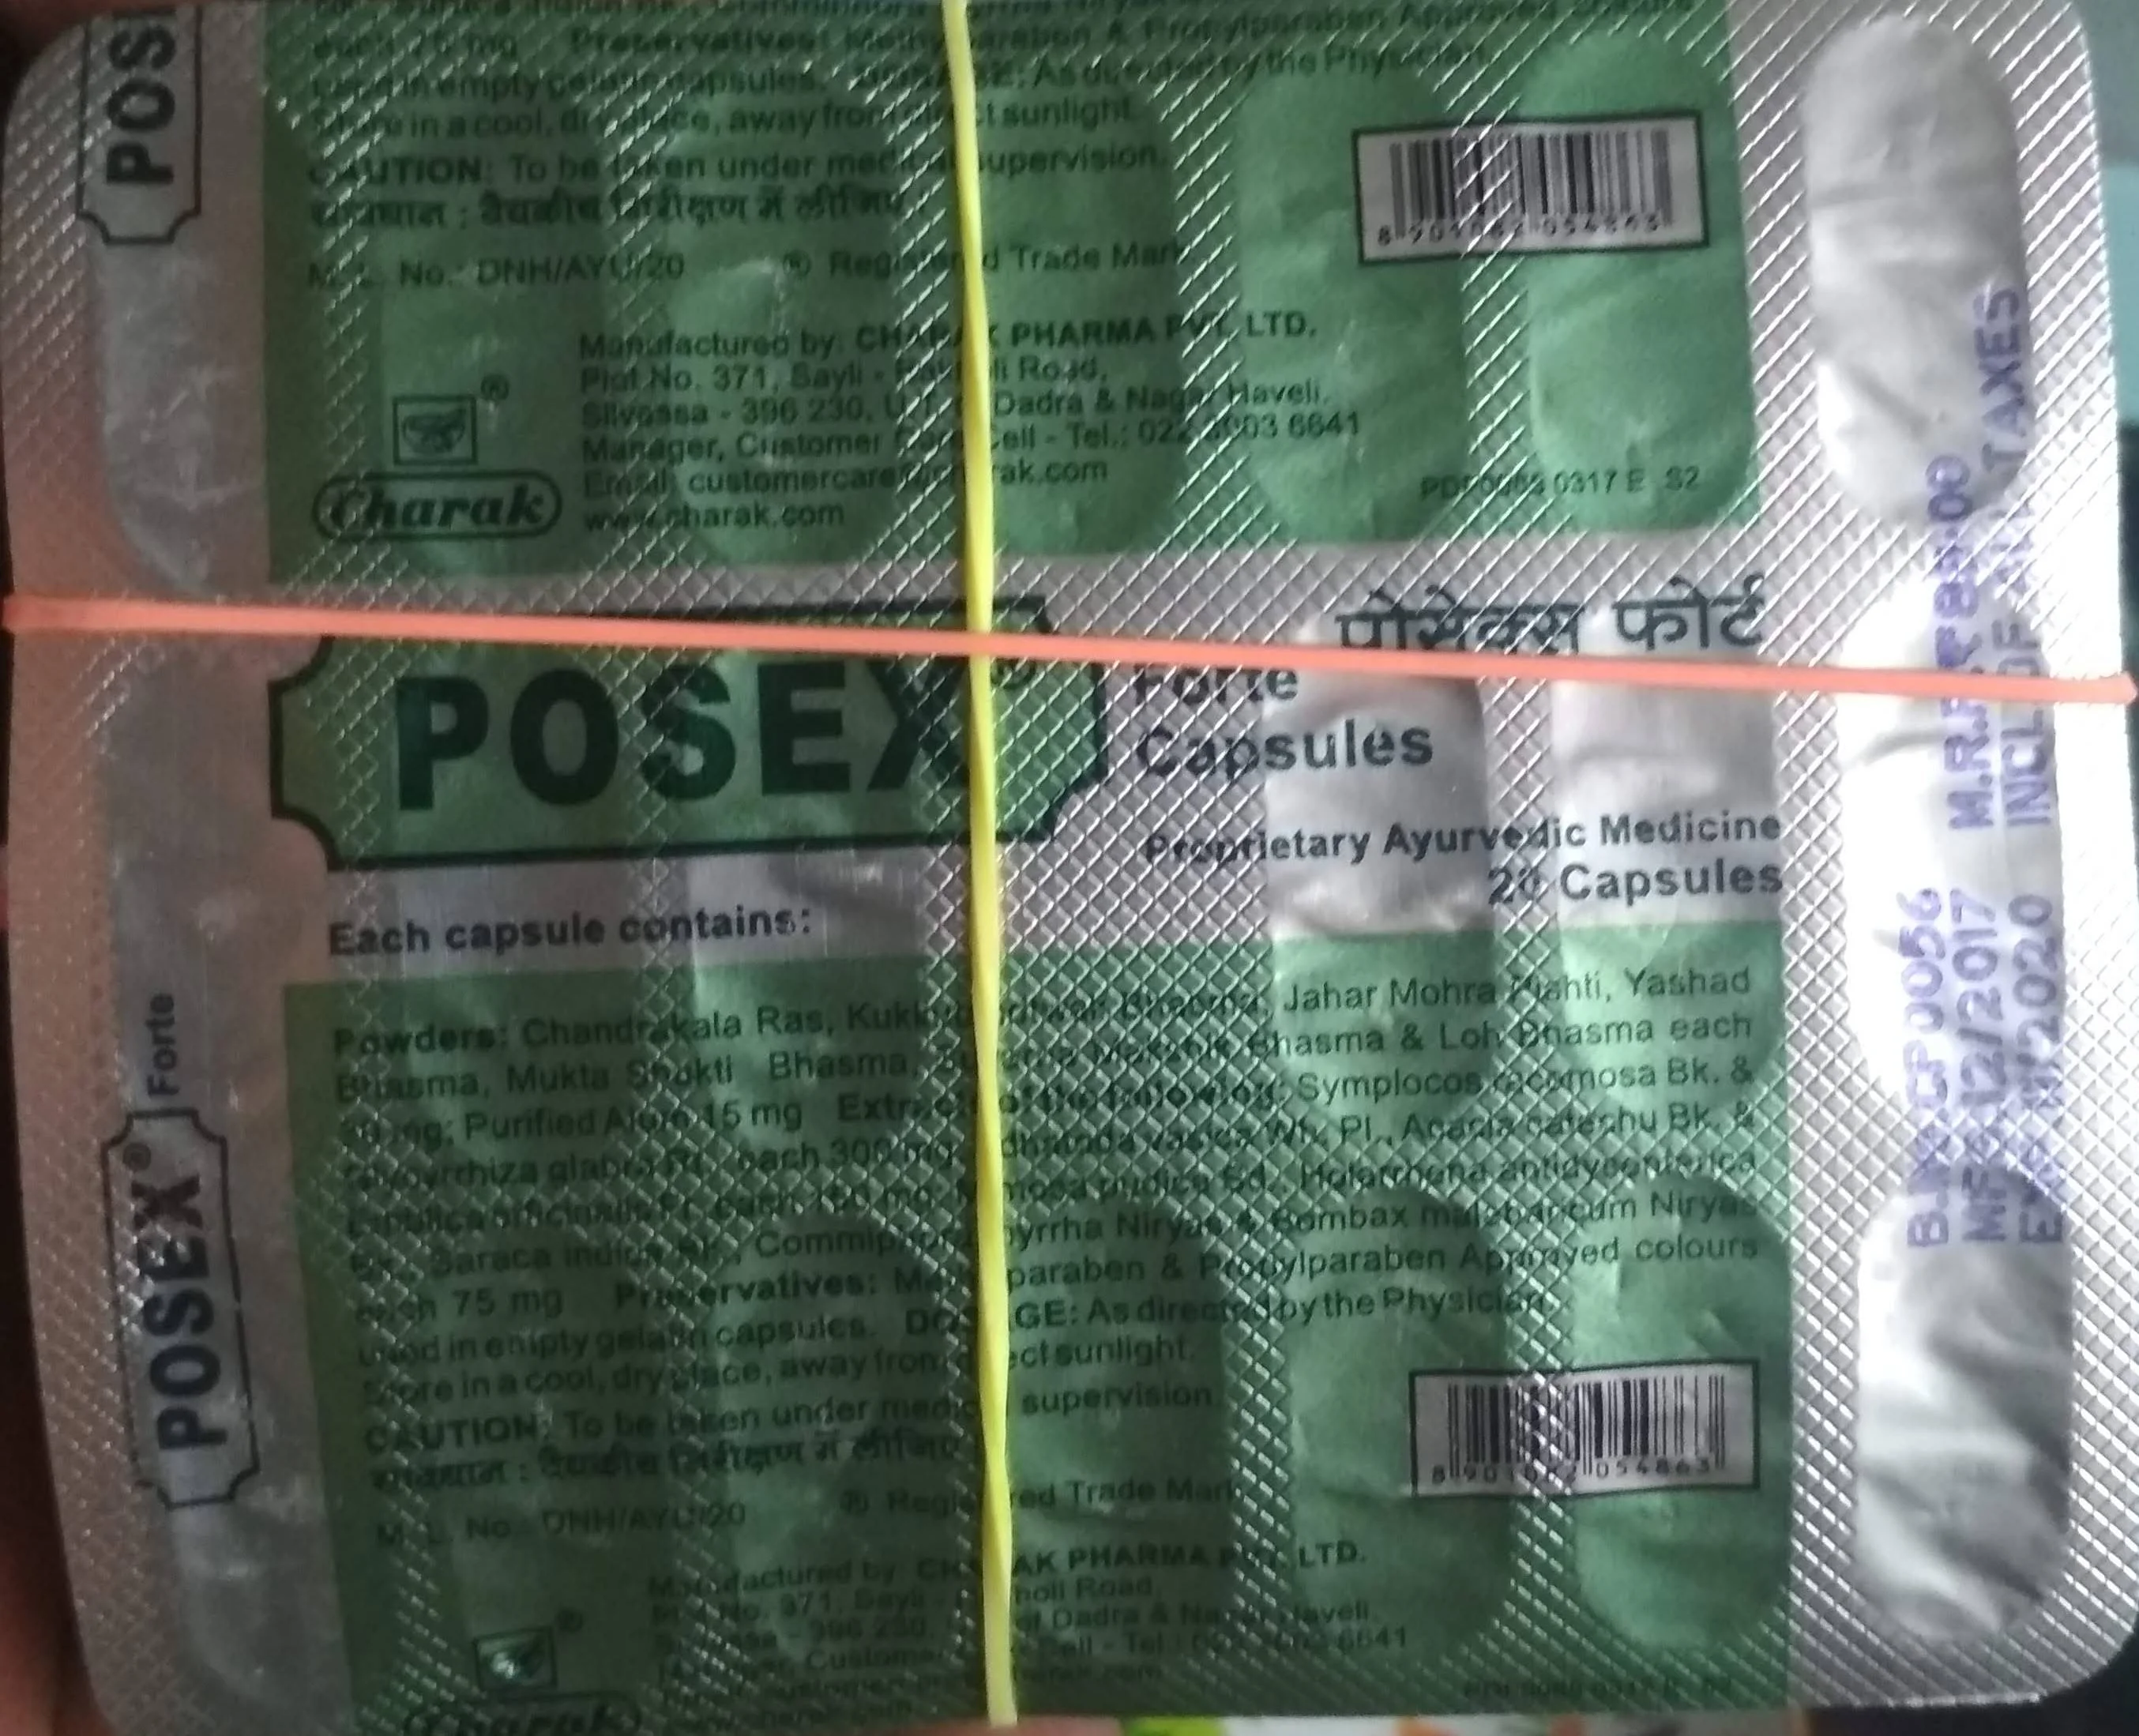 posex forte capsules 20cap upto 15% off charak phytocare